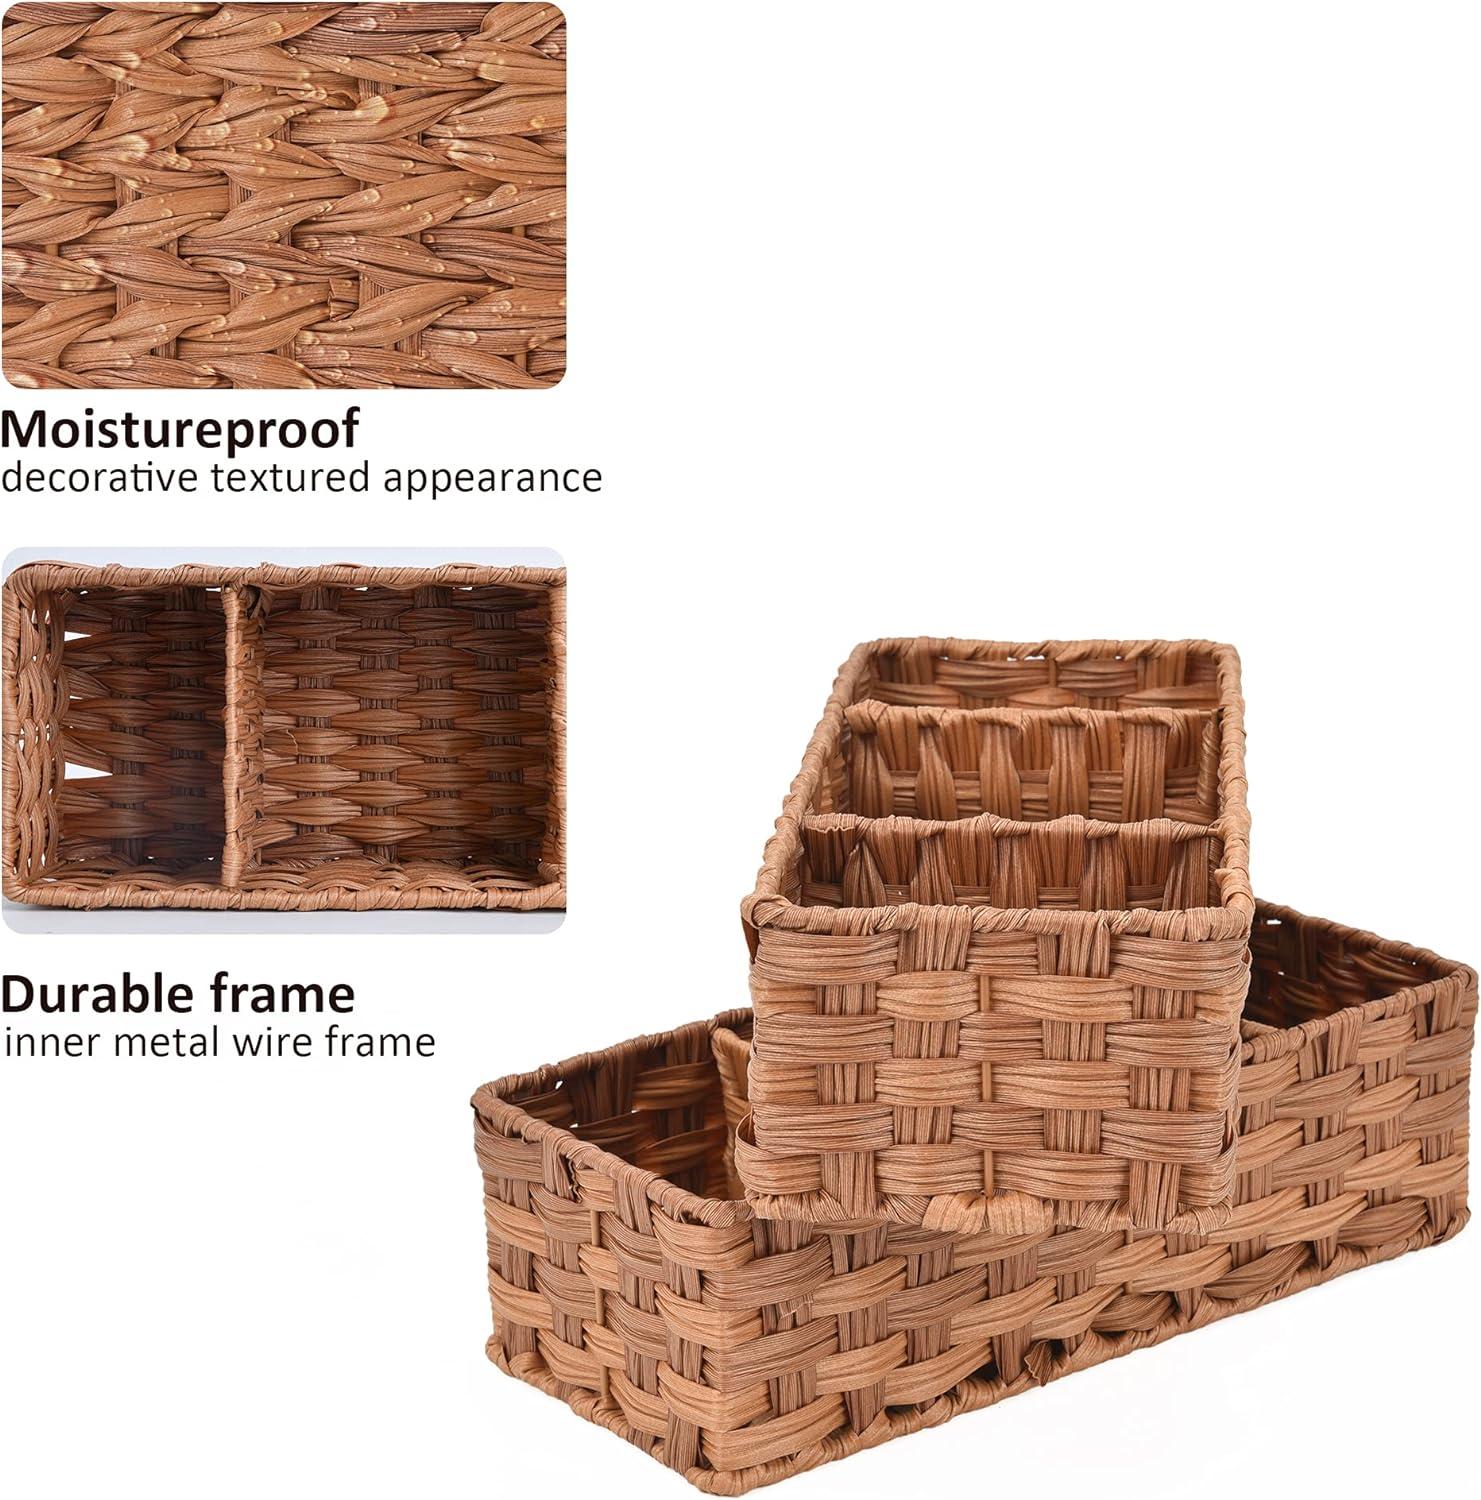 GRANNY SAYS Bathroom Baskets for Organizing, Wicker Baskets for Shelves,  Toilet Storage Basket with Dividers, Small Baskets for Organizing, Basket  for